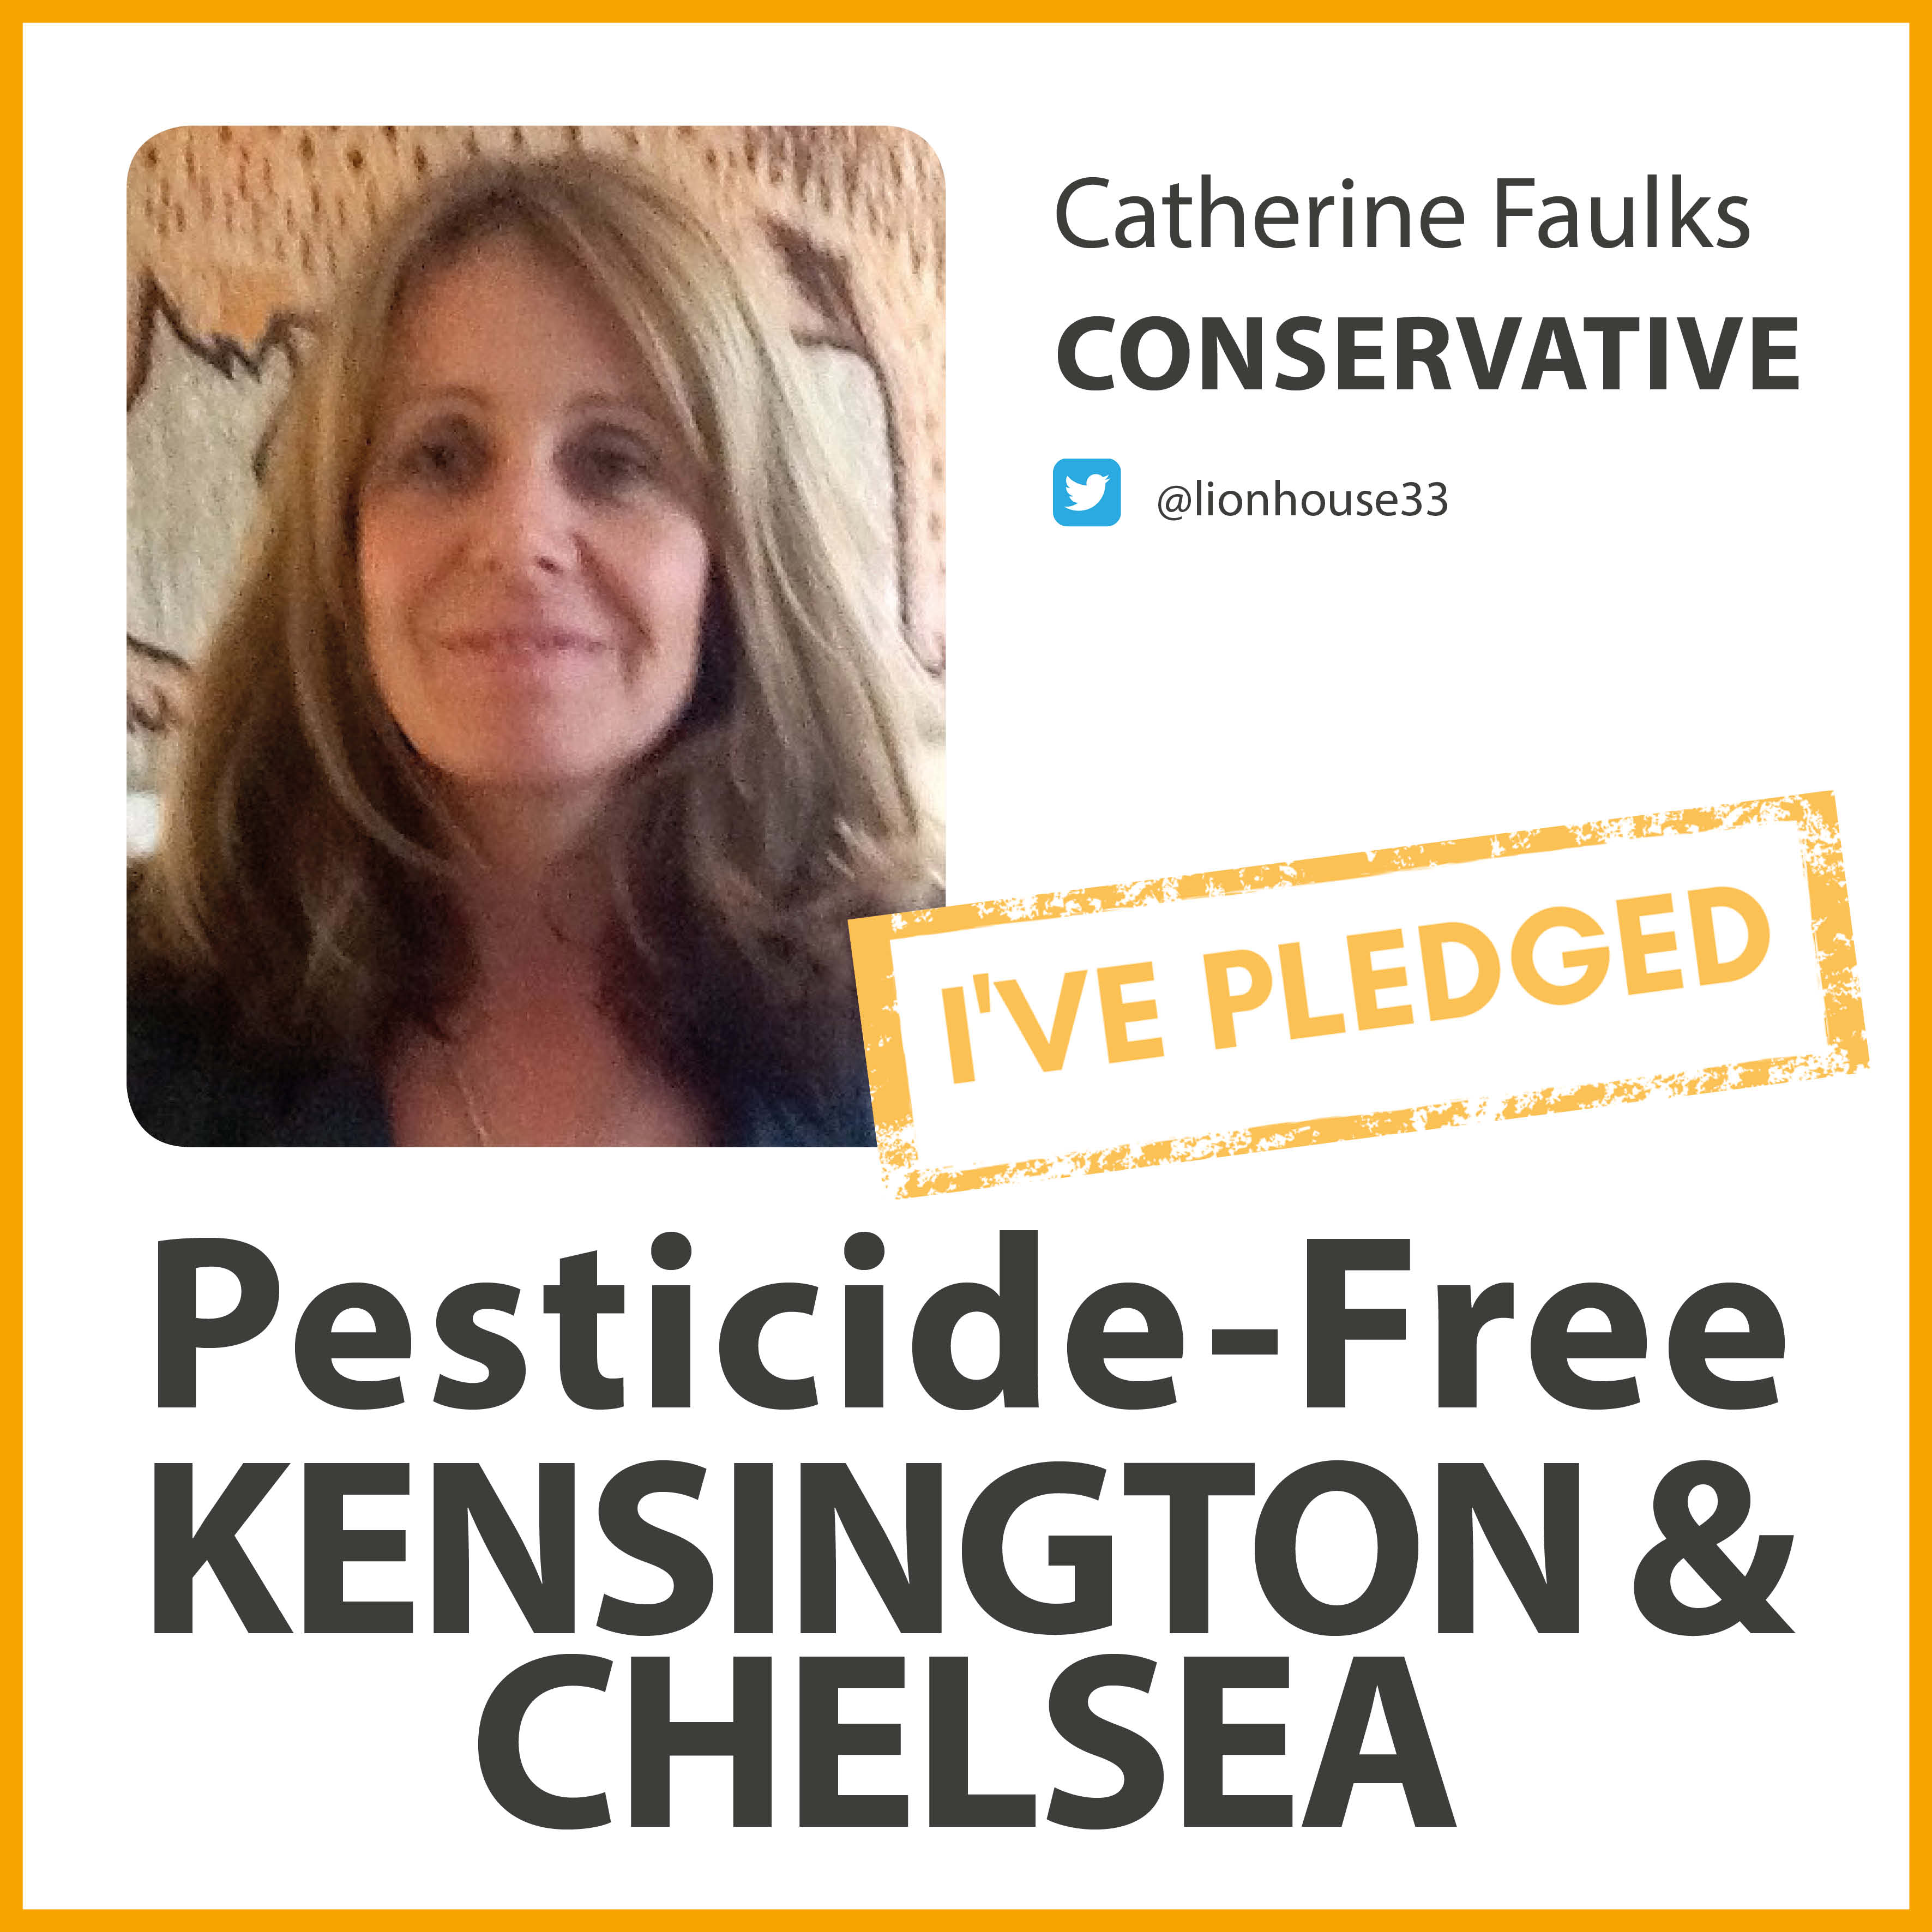 Catherine Faulks has taken the pesticide-free pledge in Kensington & Chelsea